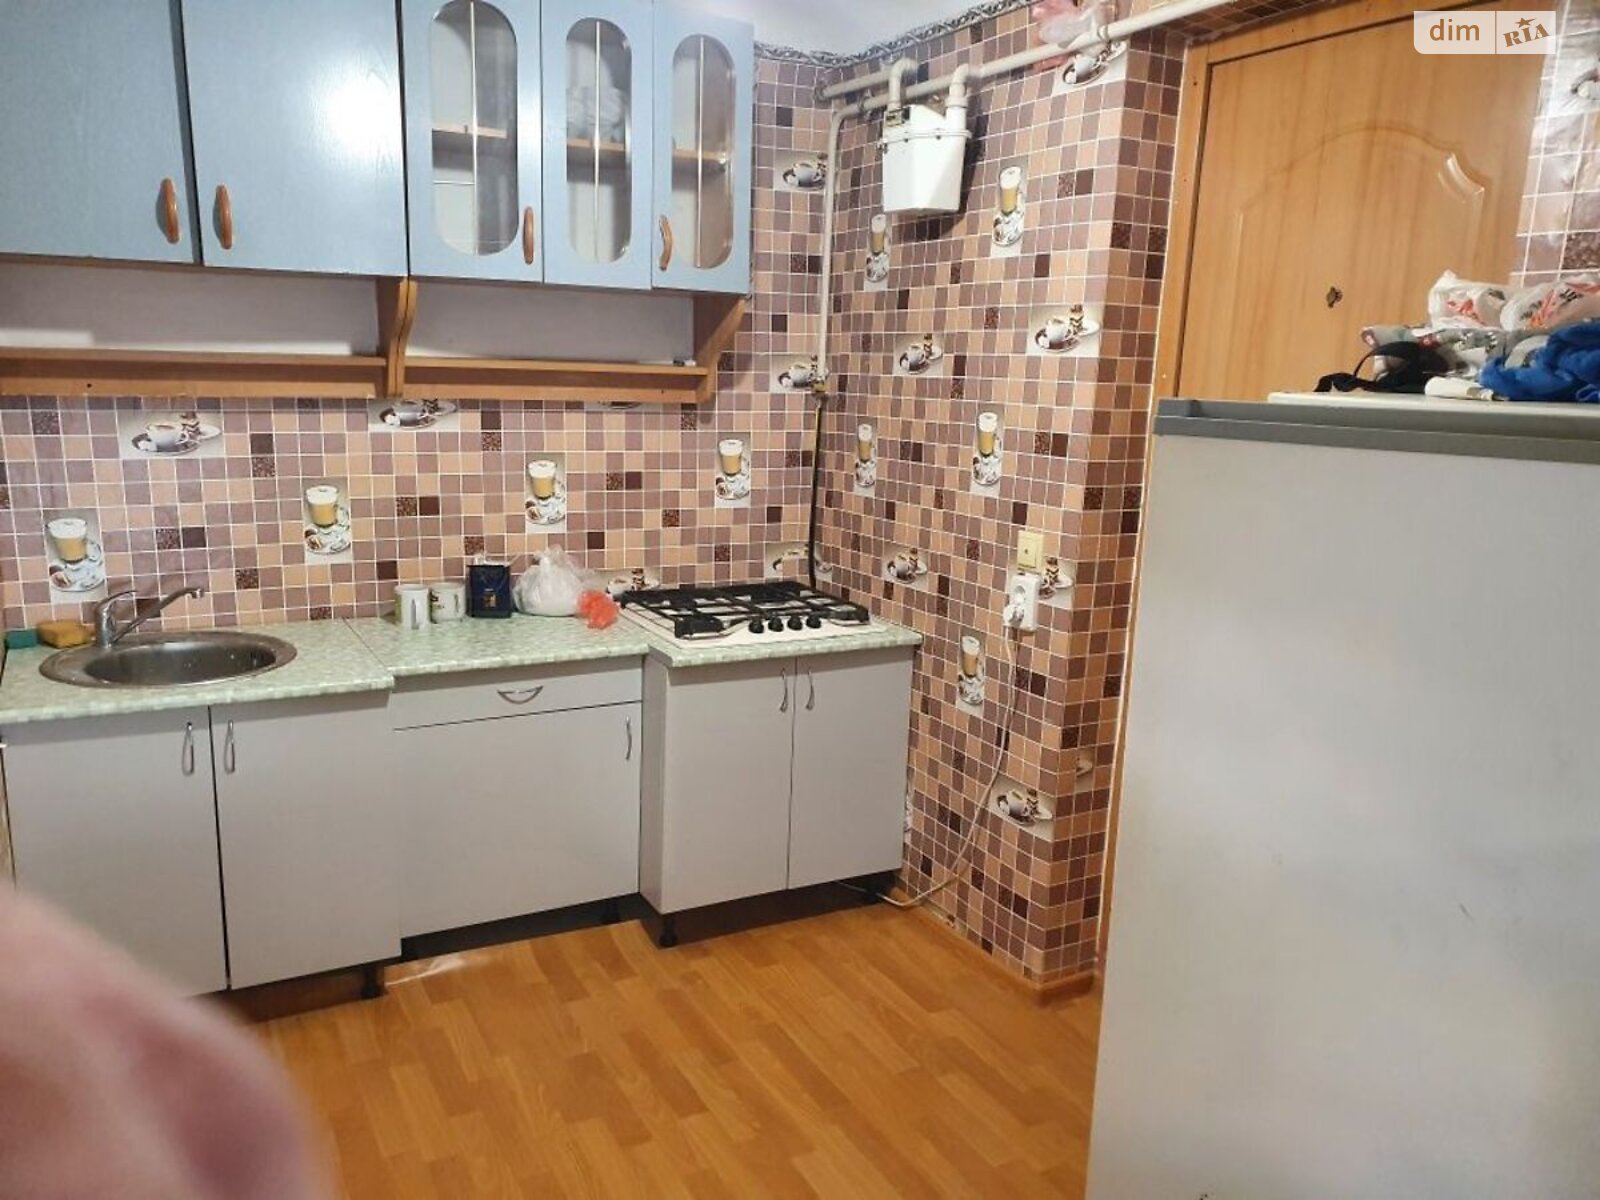 Продажа части дома в Кропивницком, переулок Короленко, район Новониколаевка, 1 комната фото 1